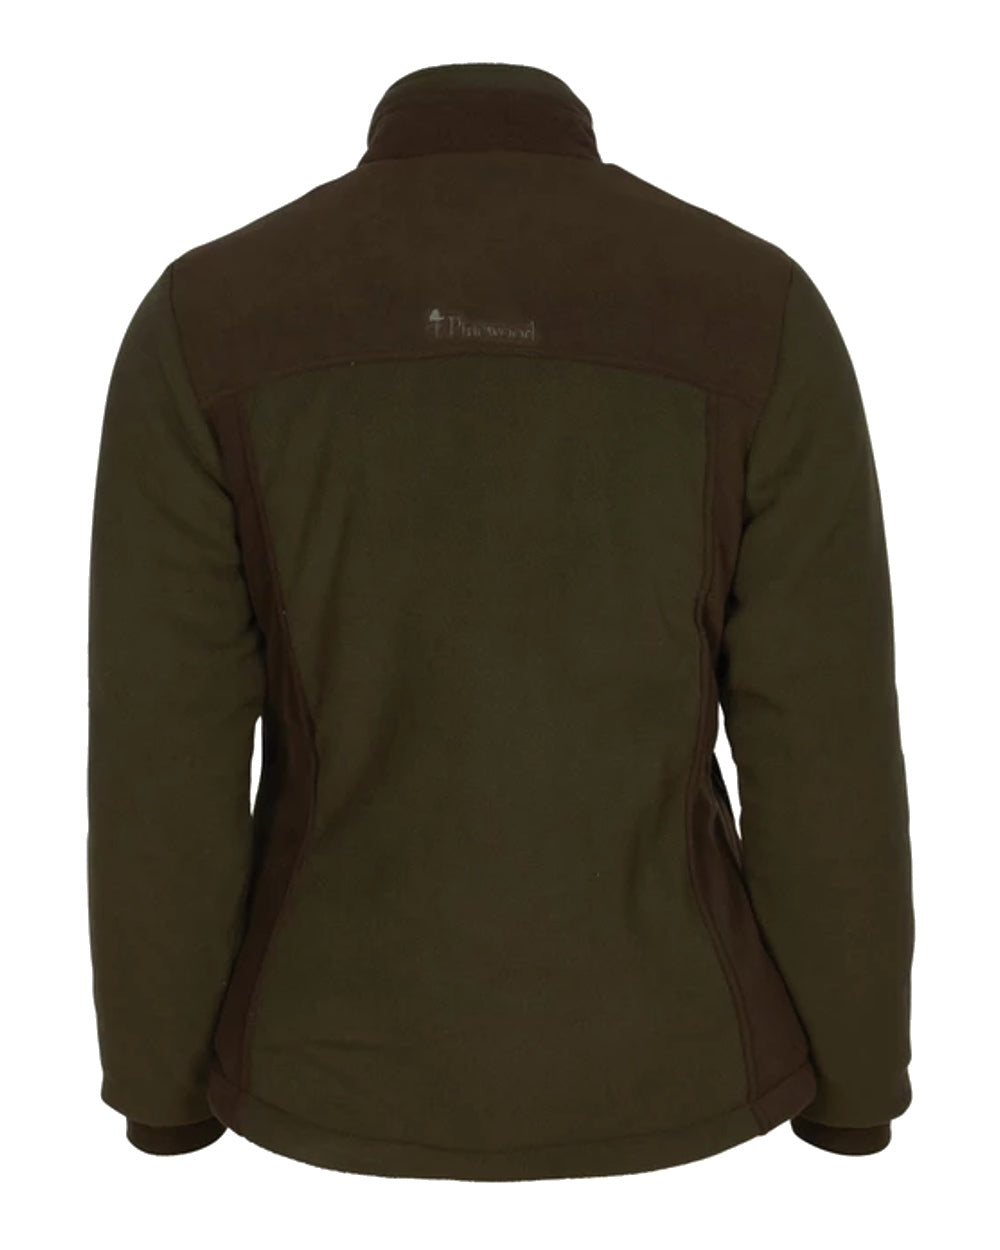 Pinewood Womens Harriette Padded Fleece Jacket in Green/Suede Brown